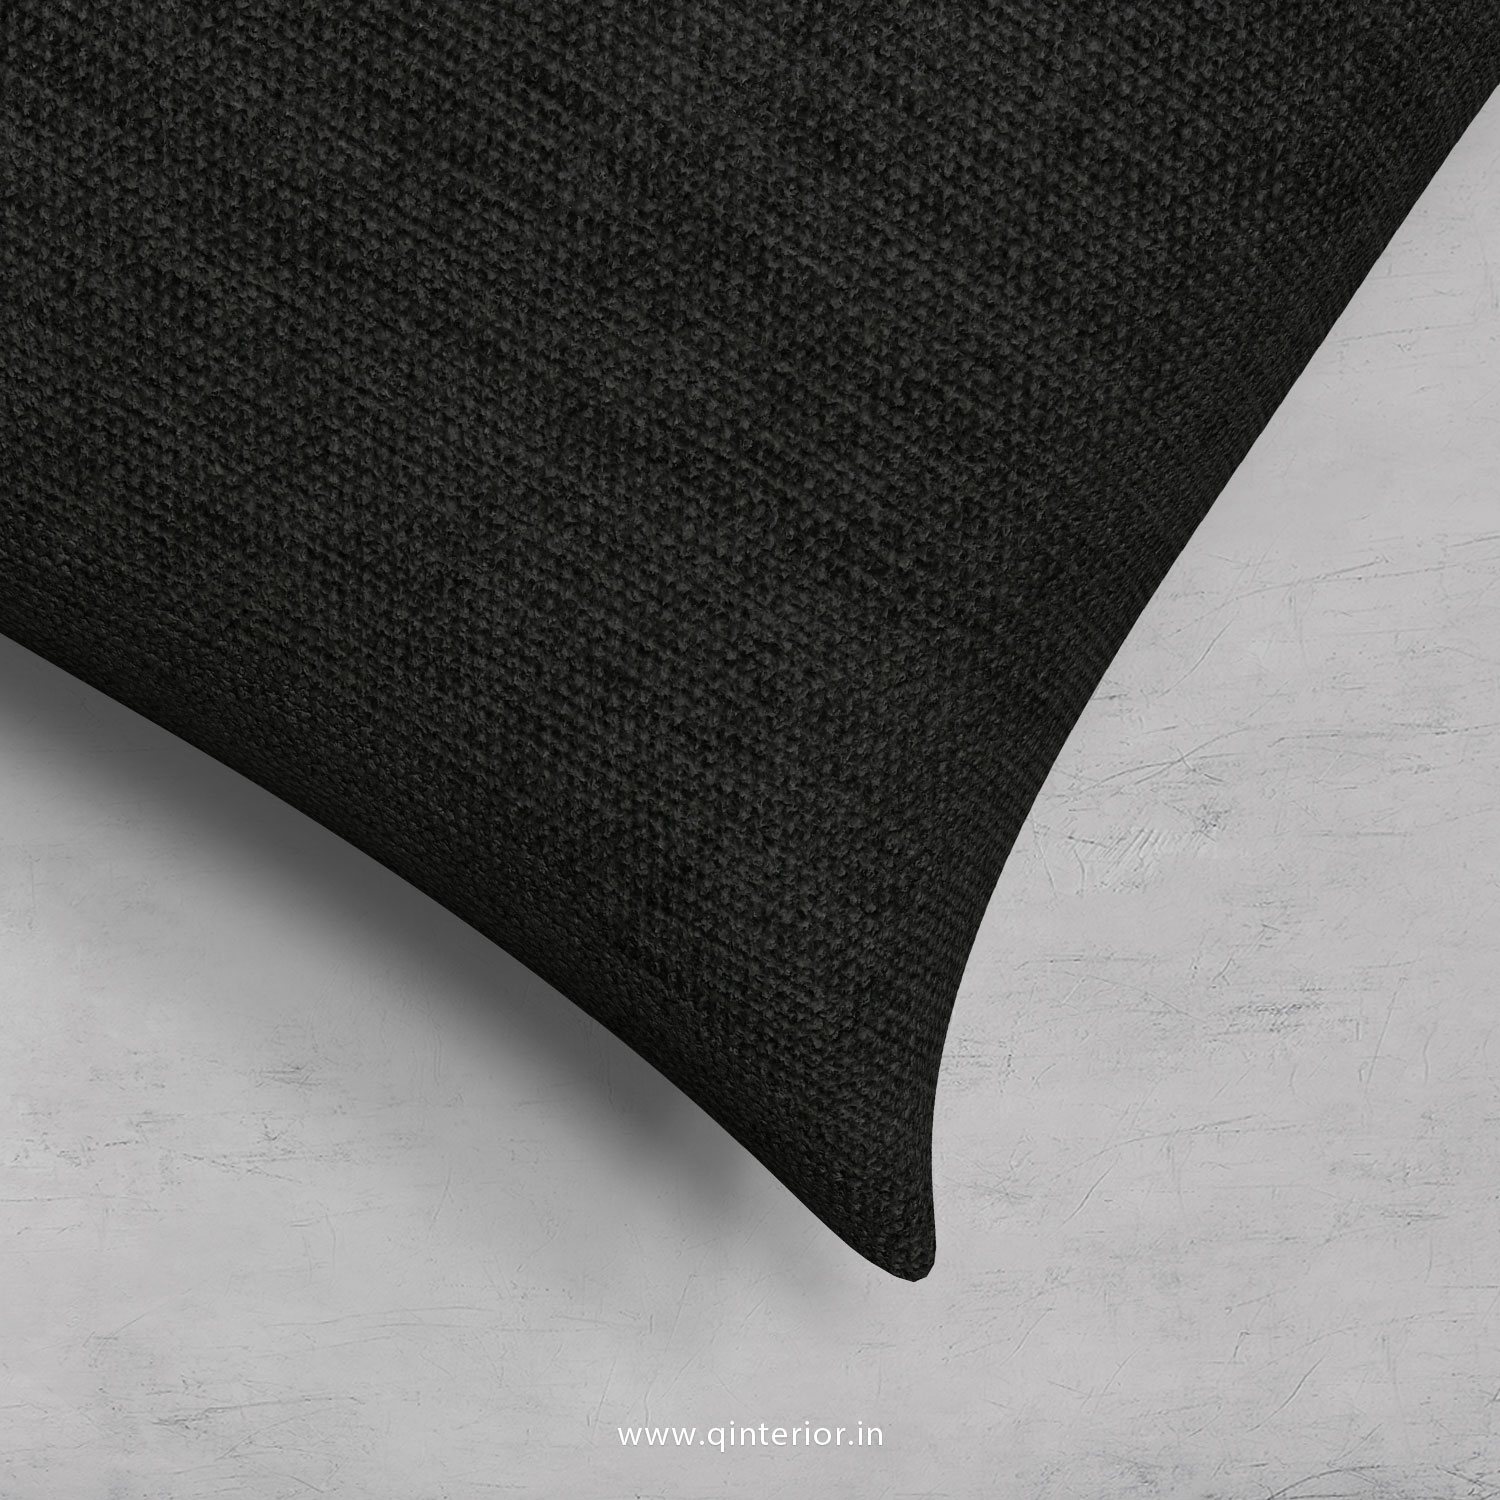 Cushion With Cushion Cover in Marvello - CUS001 MV04